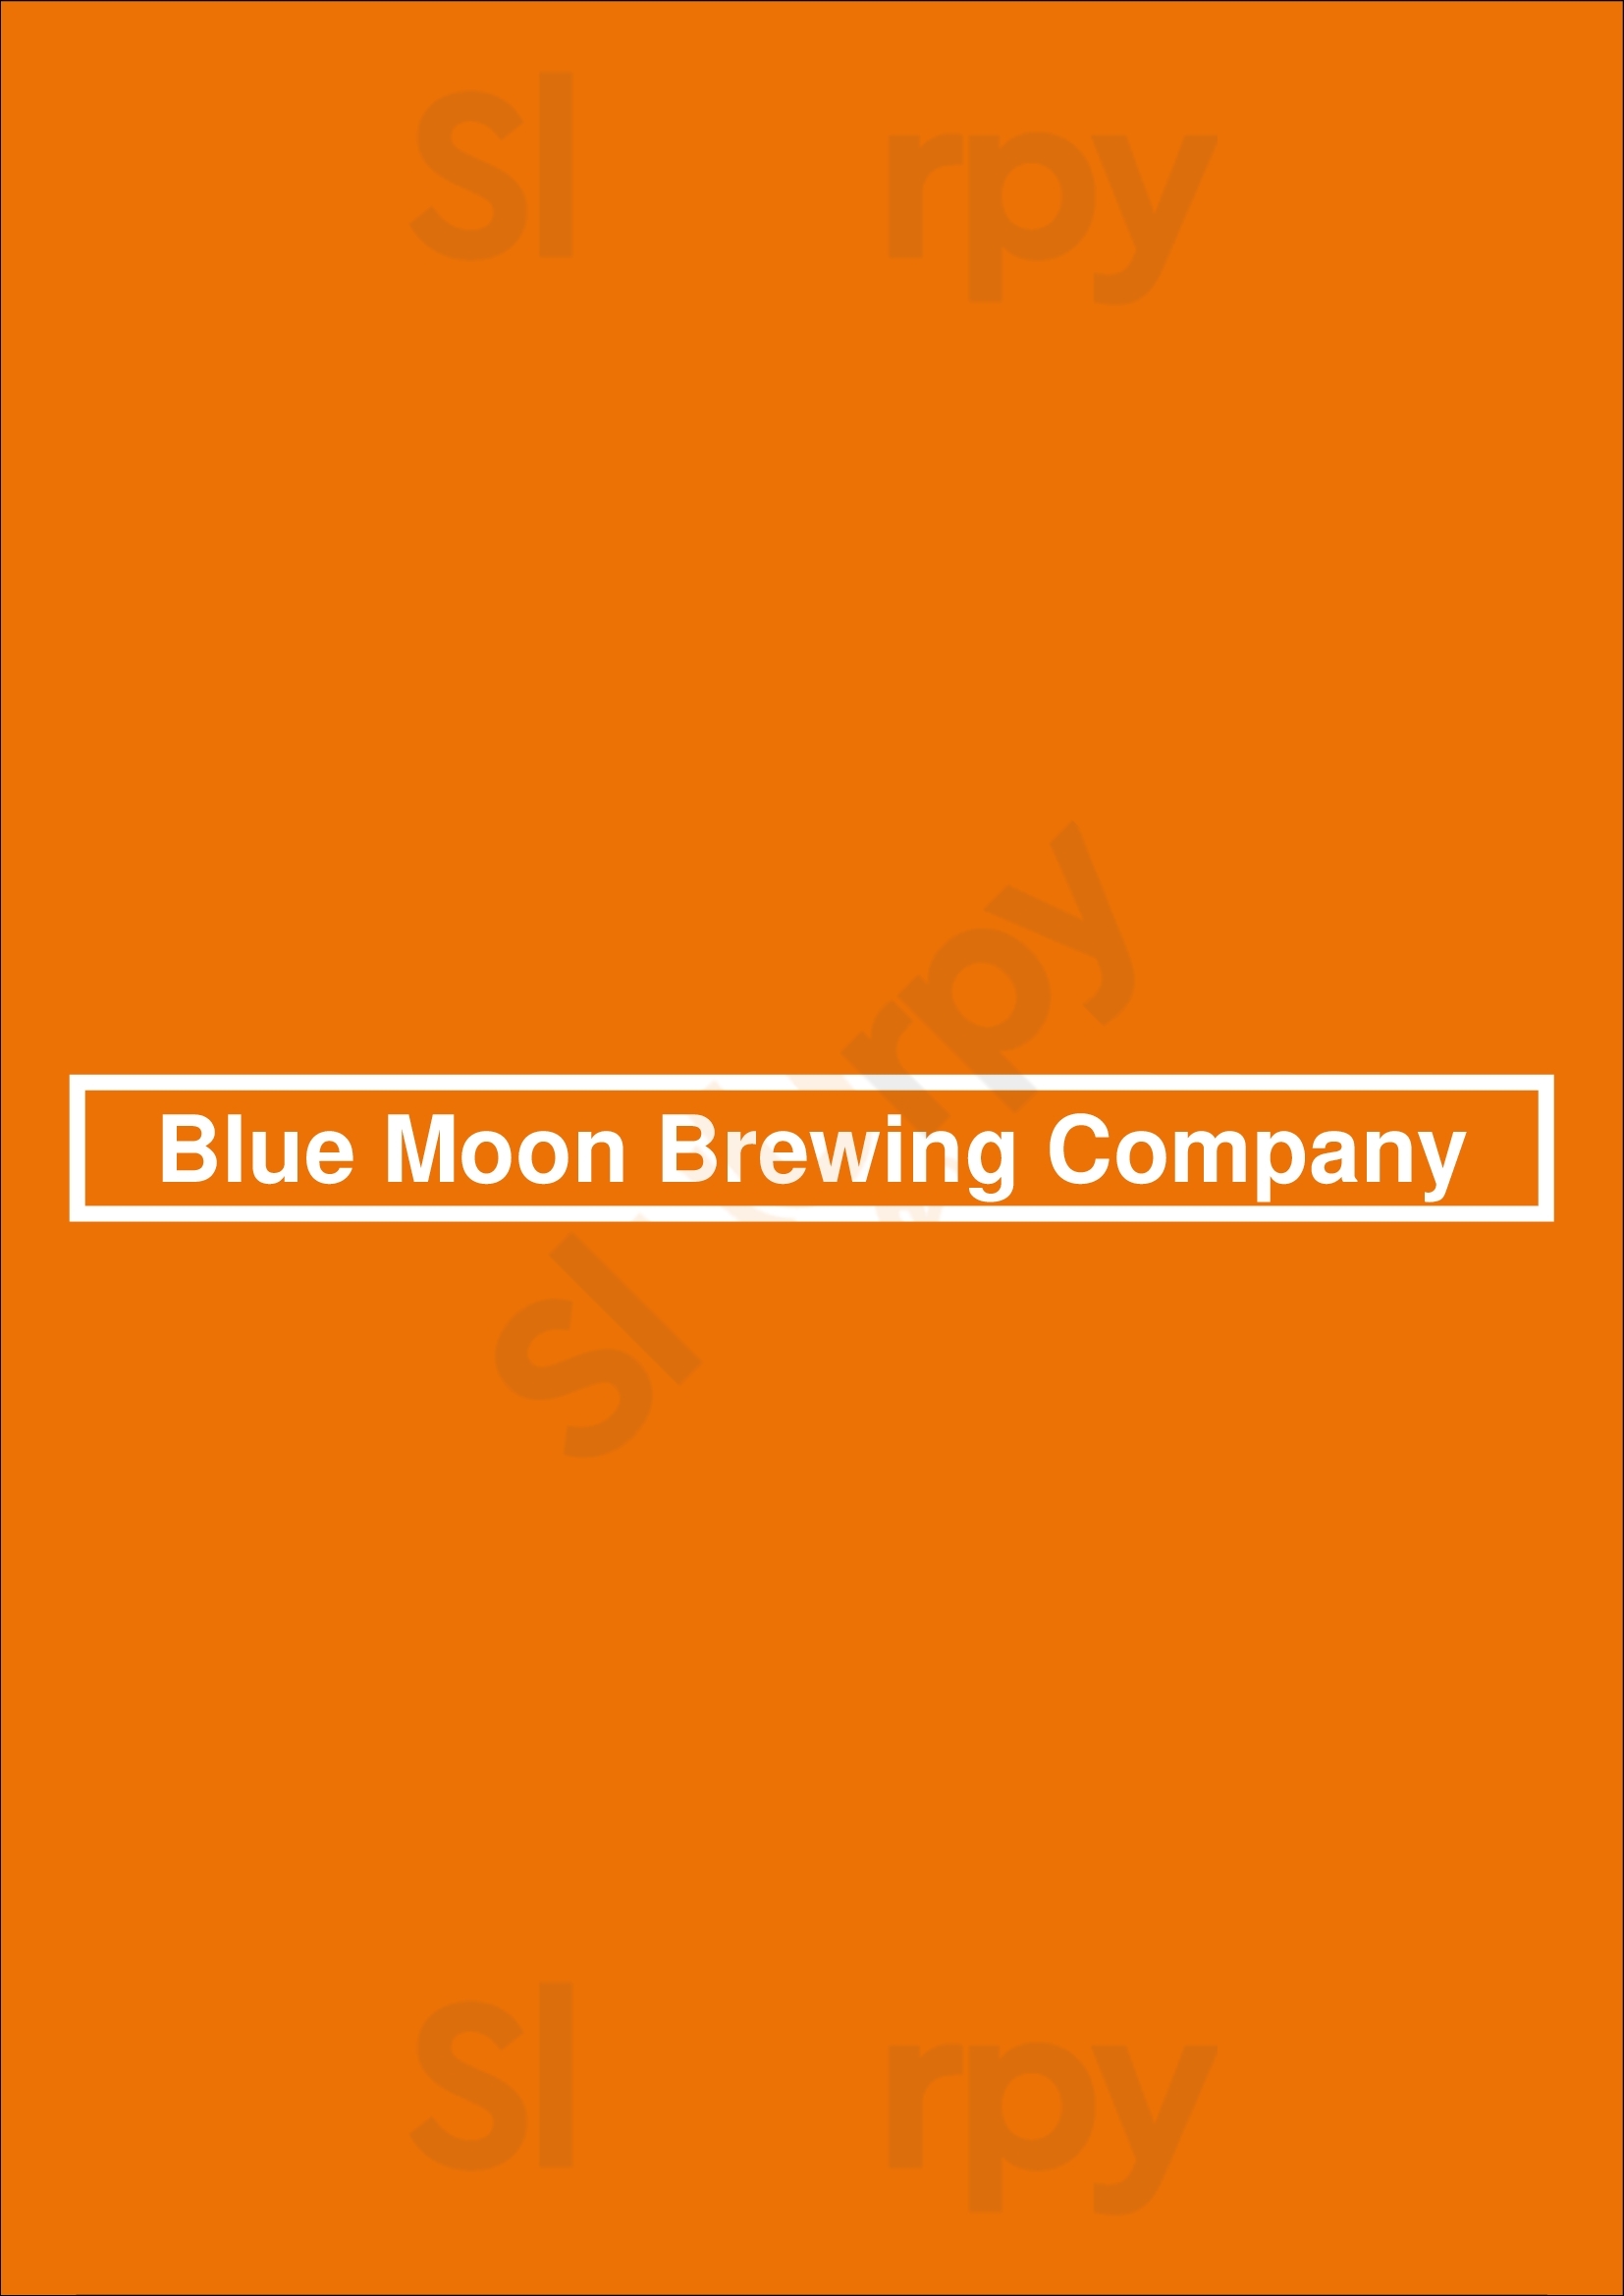 Blue Moon Brewing Company Denver Menu - 1